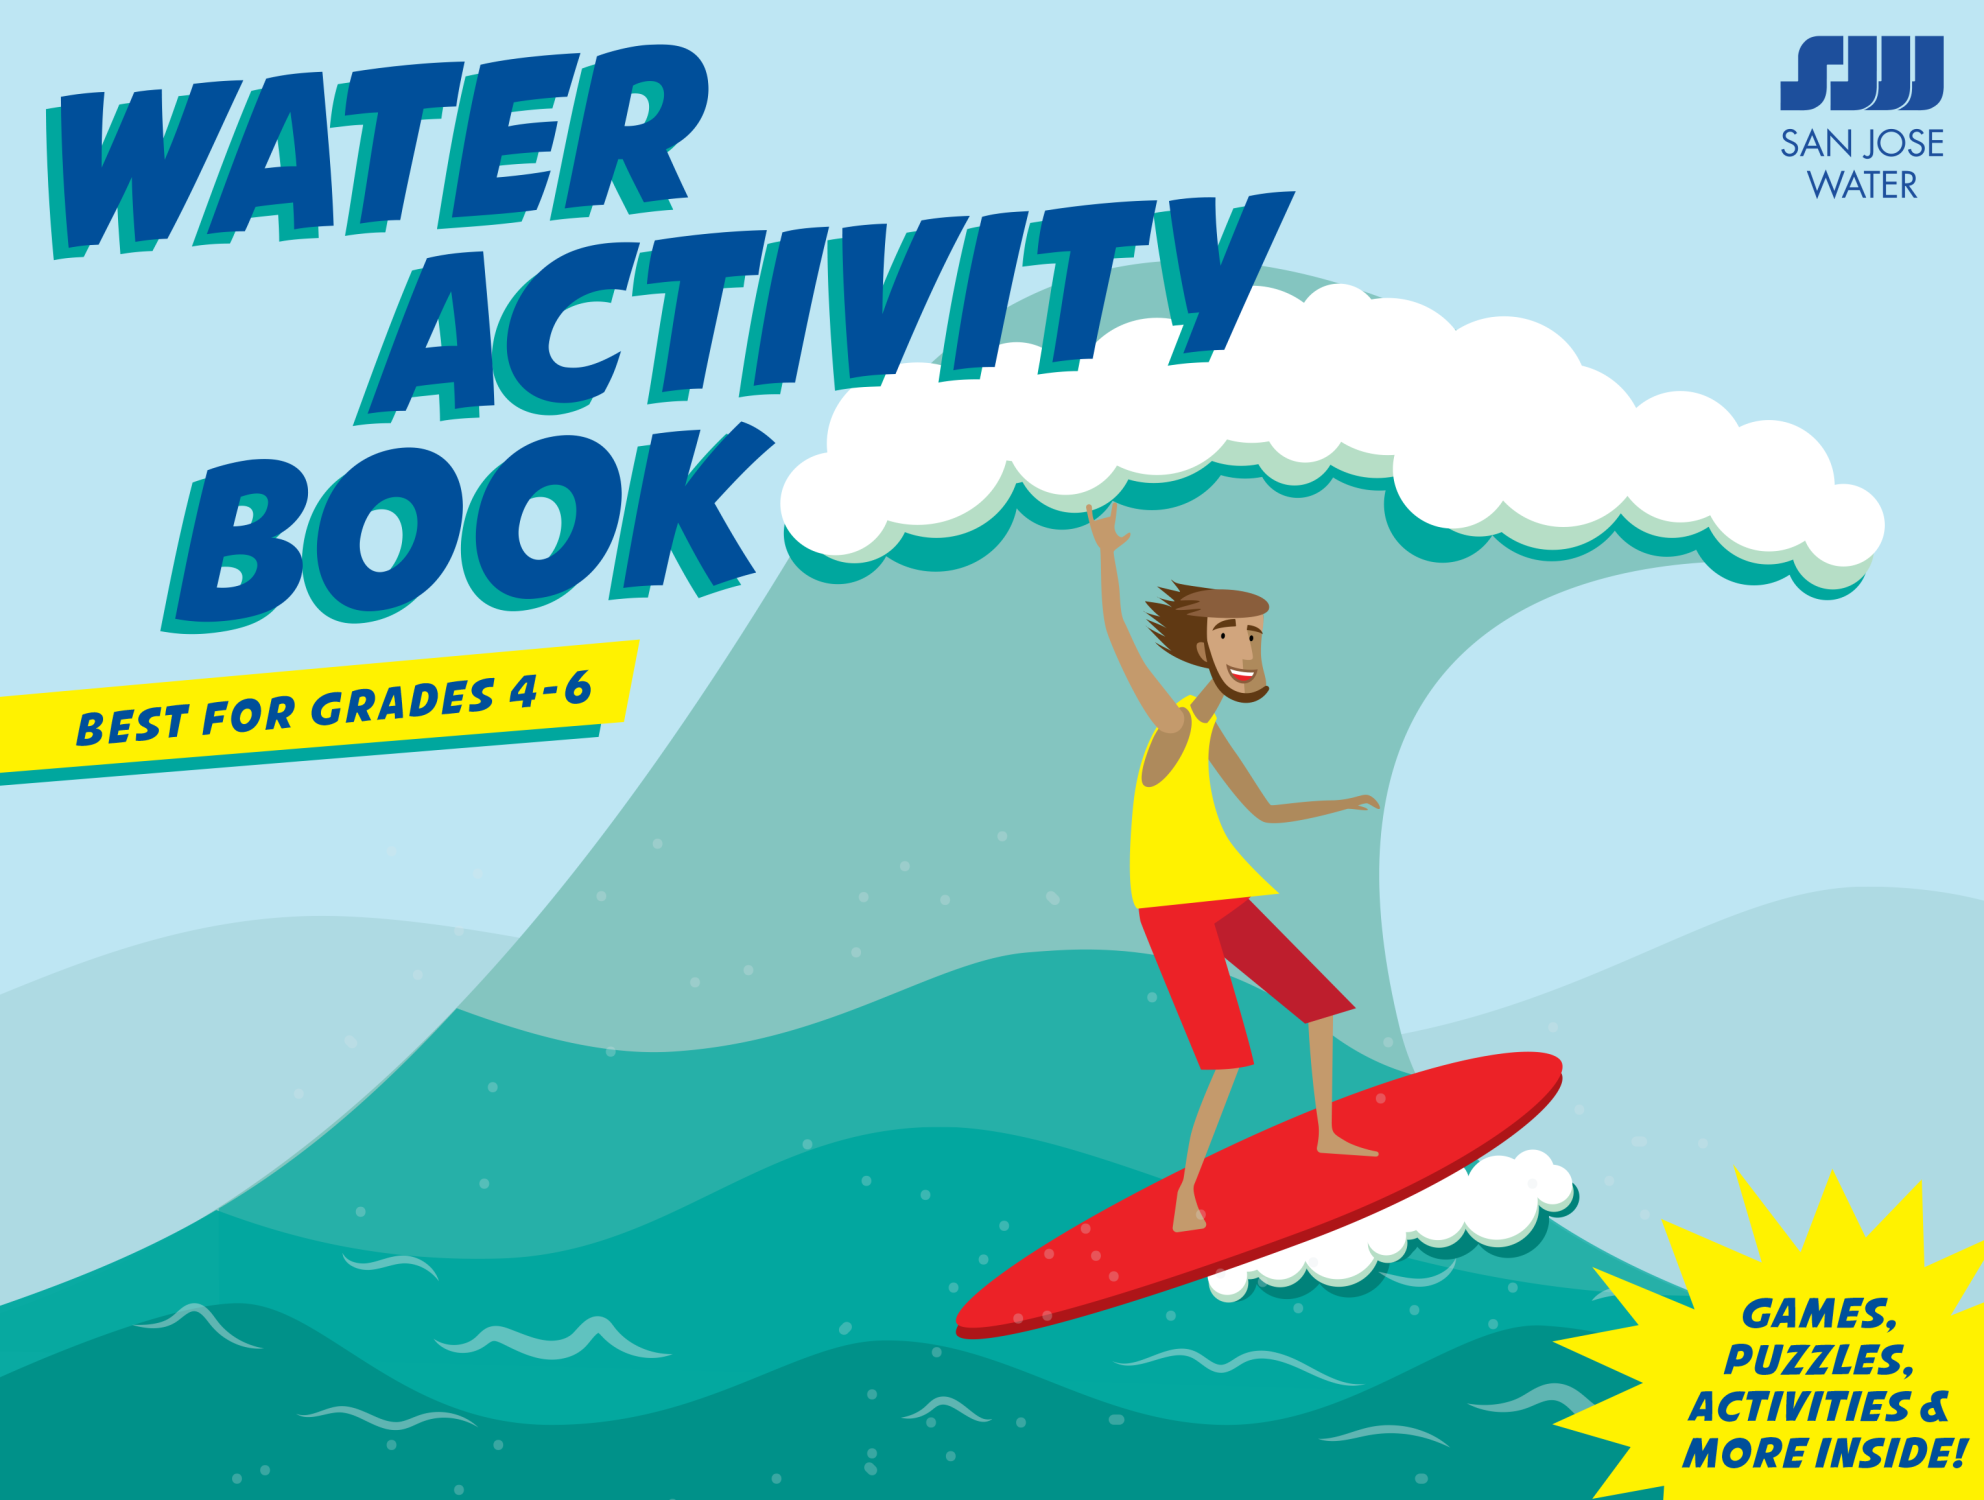 San Jose Water Activity Book grades 4-6 cover